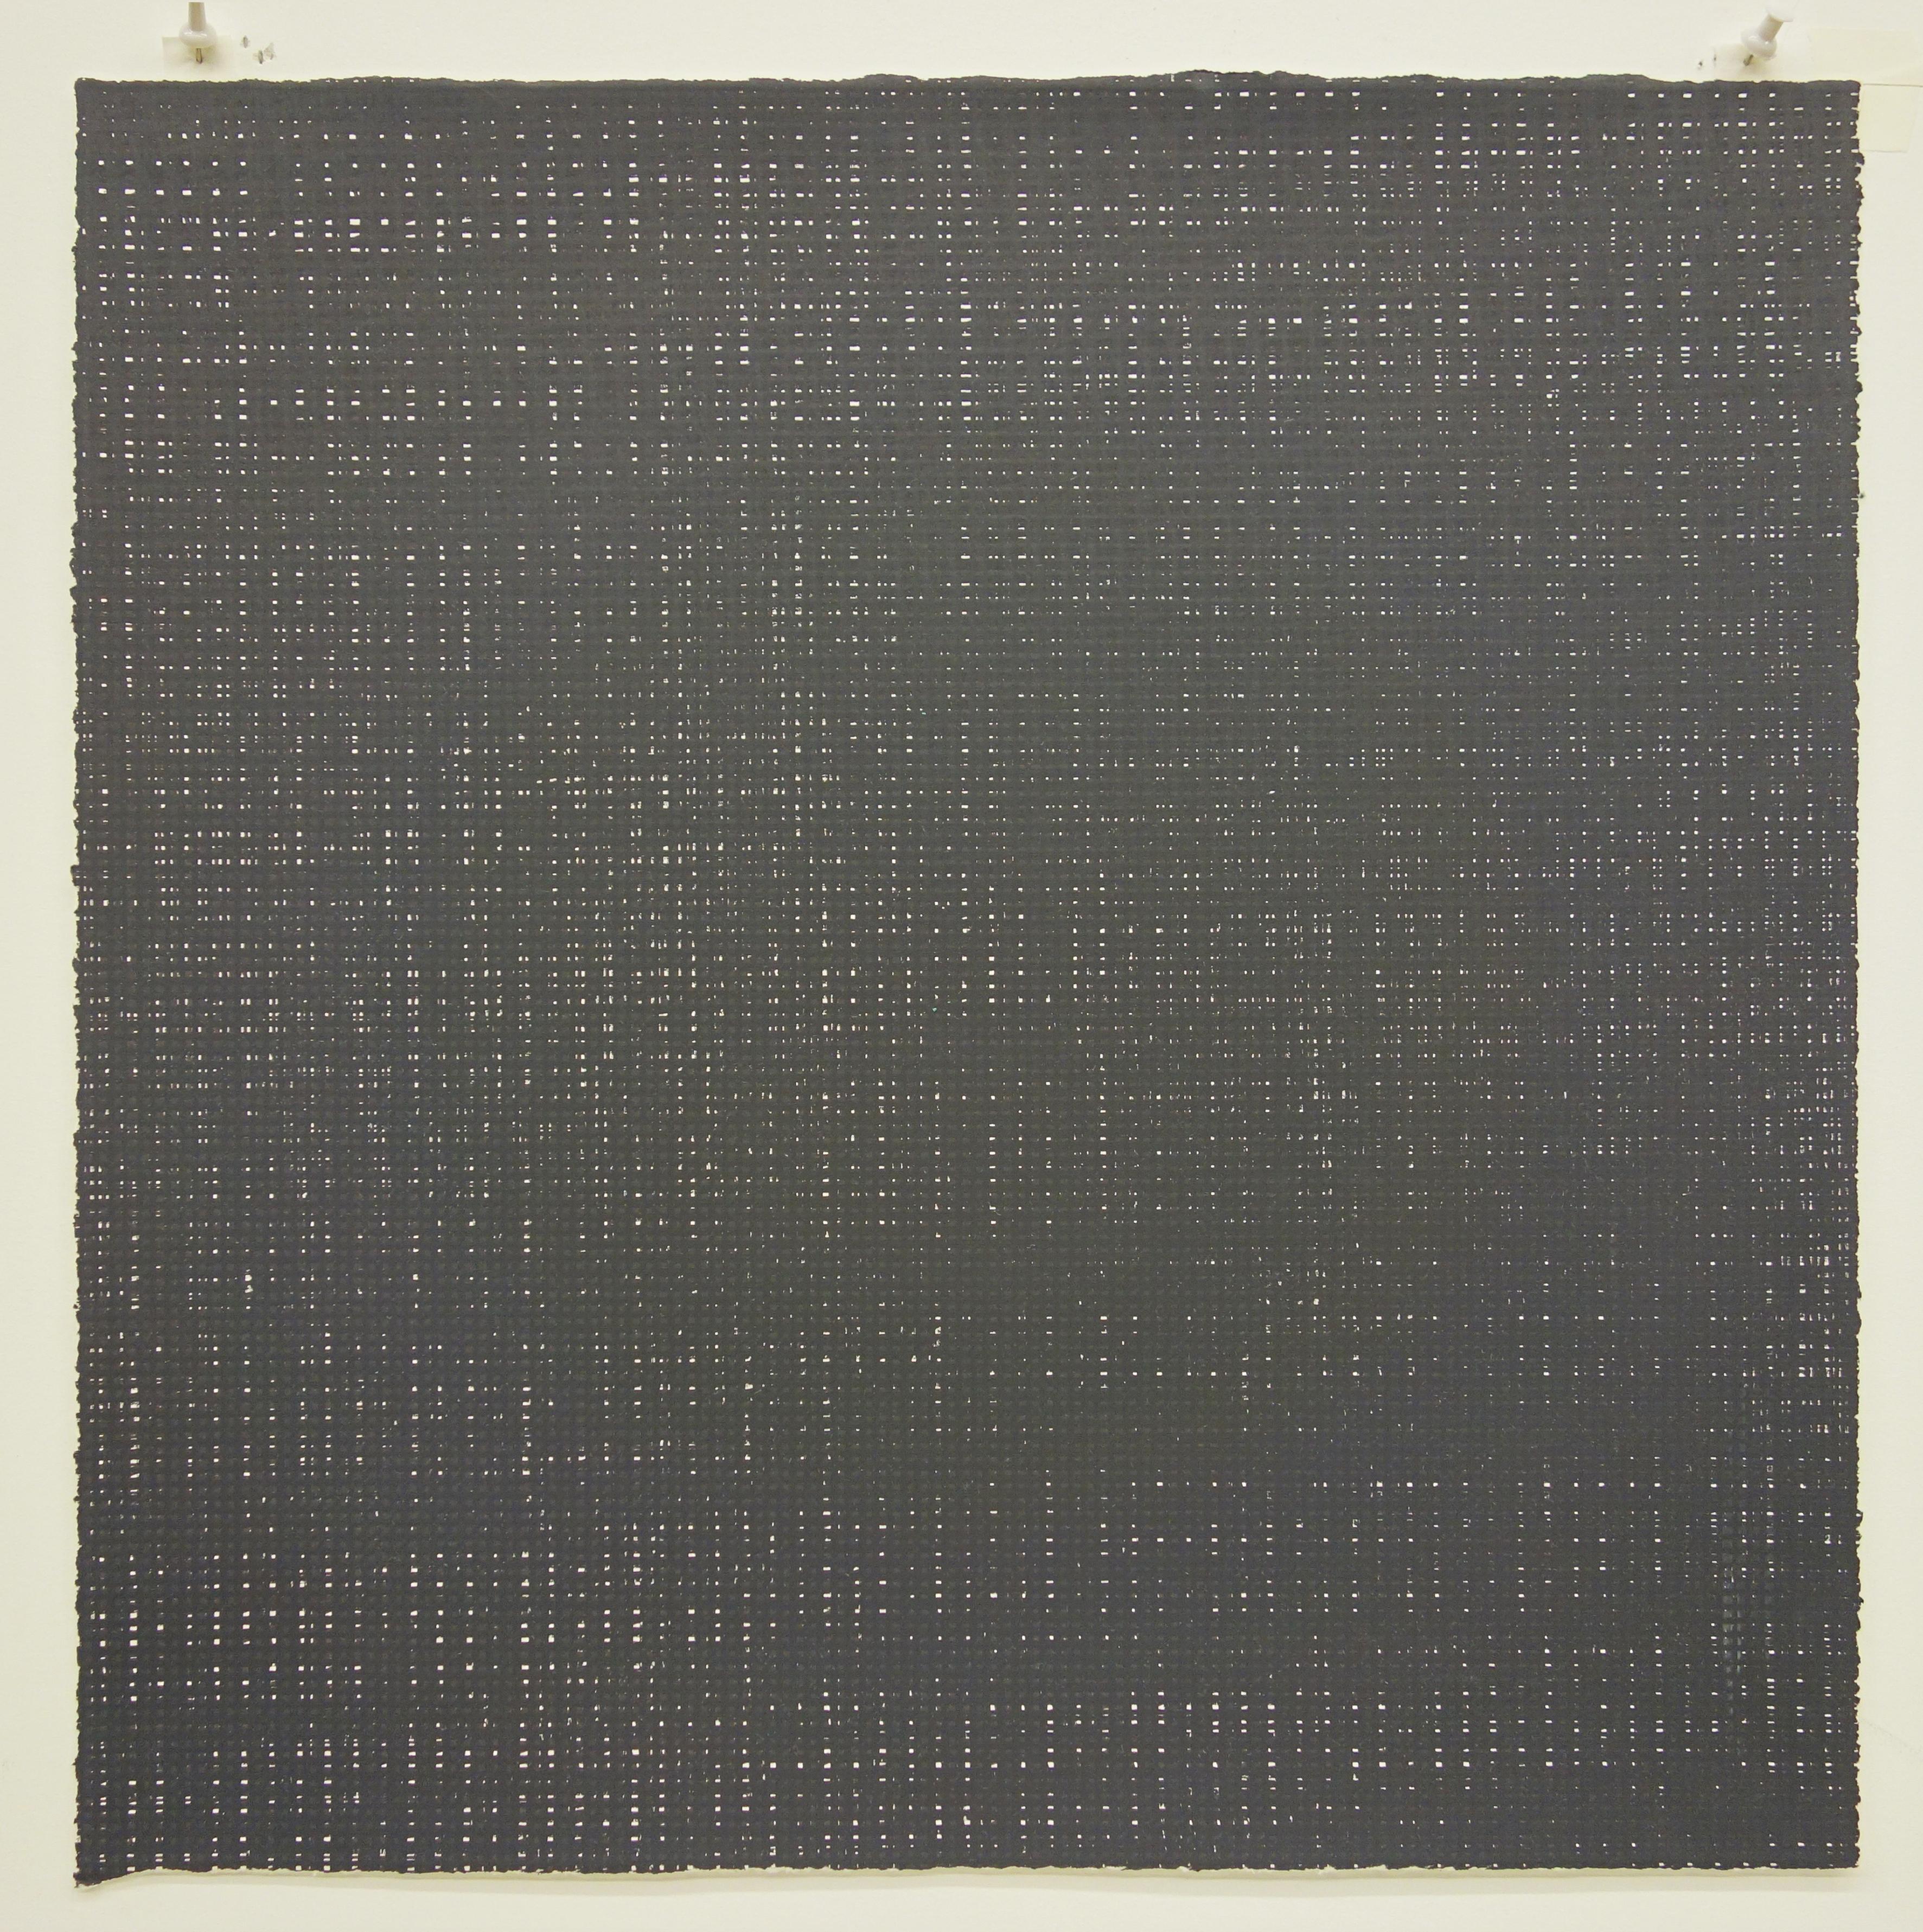 Rob de Oude, Untitled-Wassaic 8, 2016, silkscreen, 18 x 18 inches, Suite of 10 8